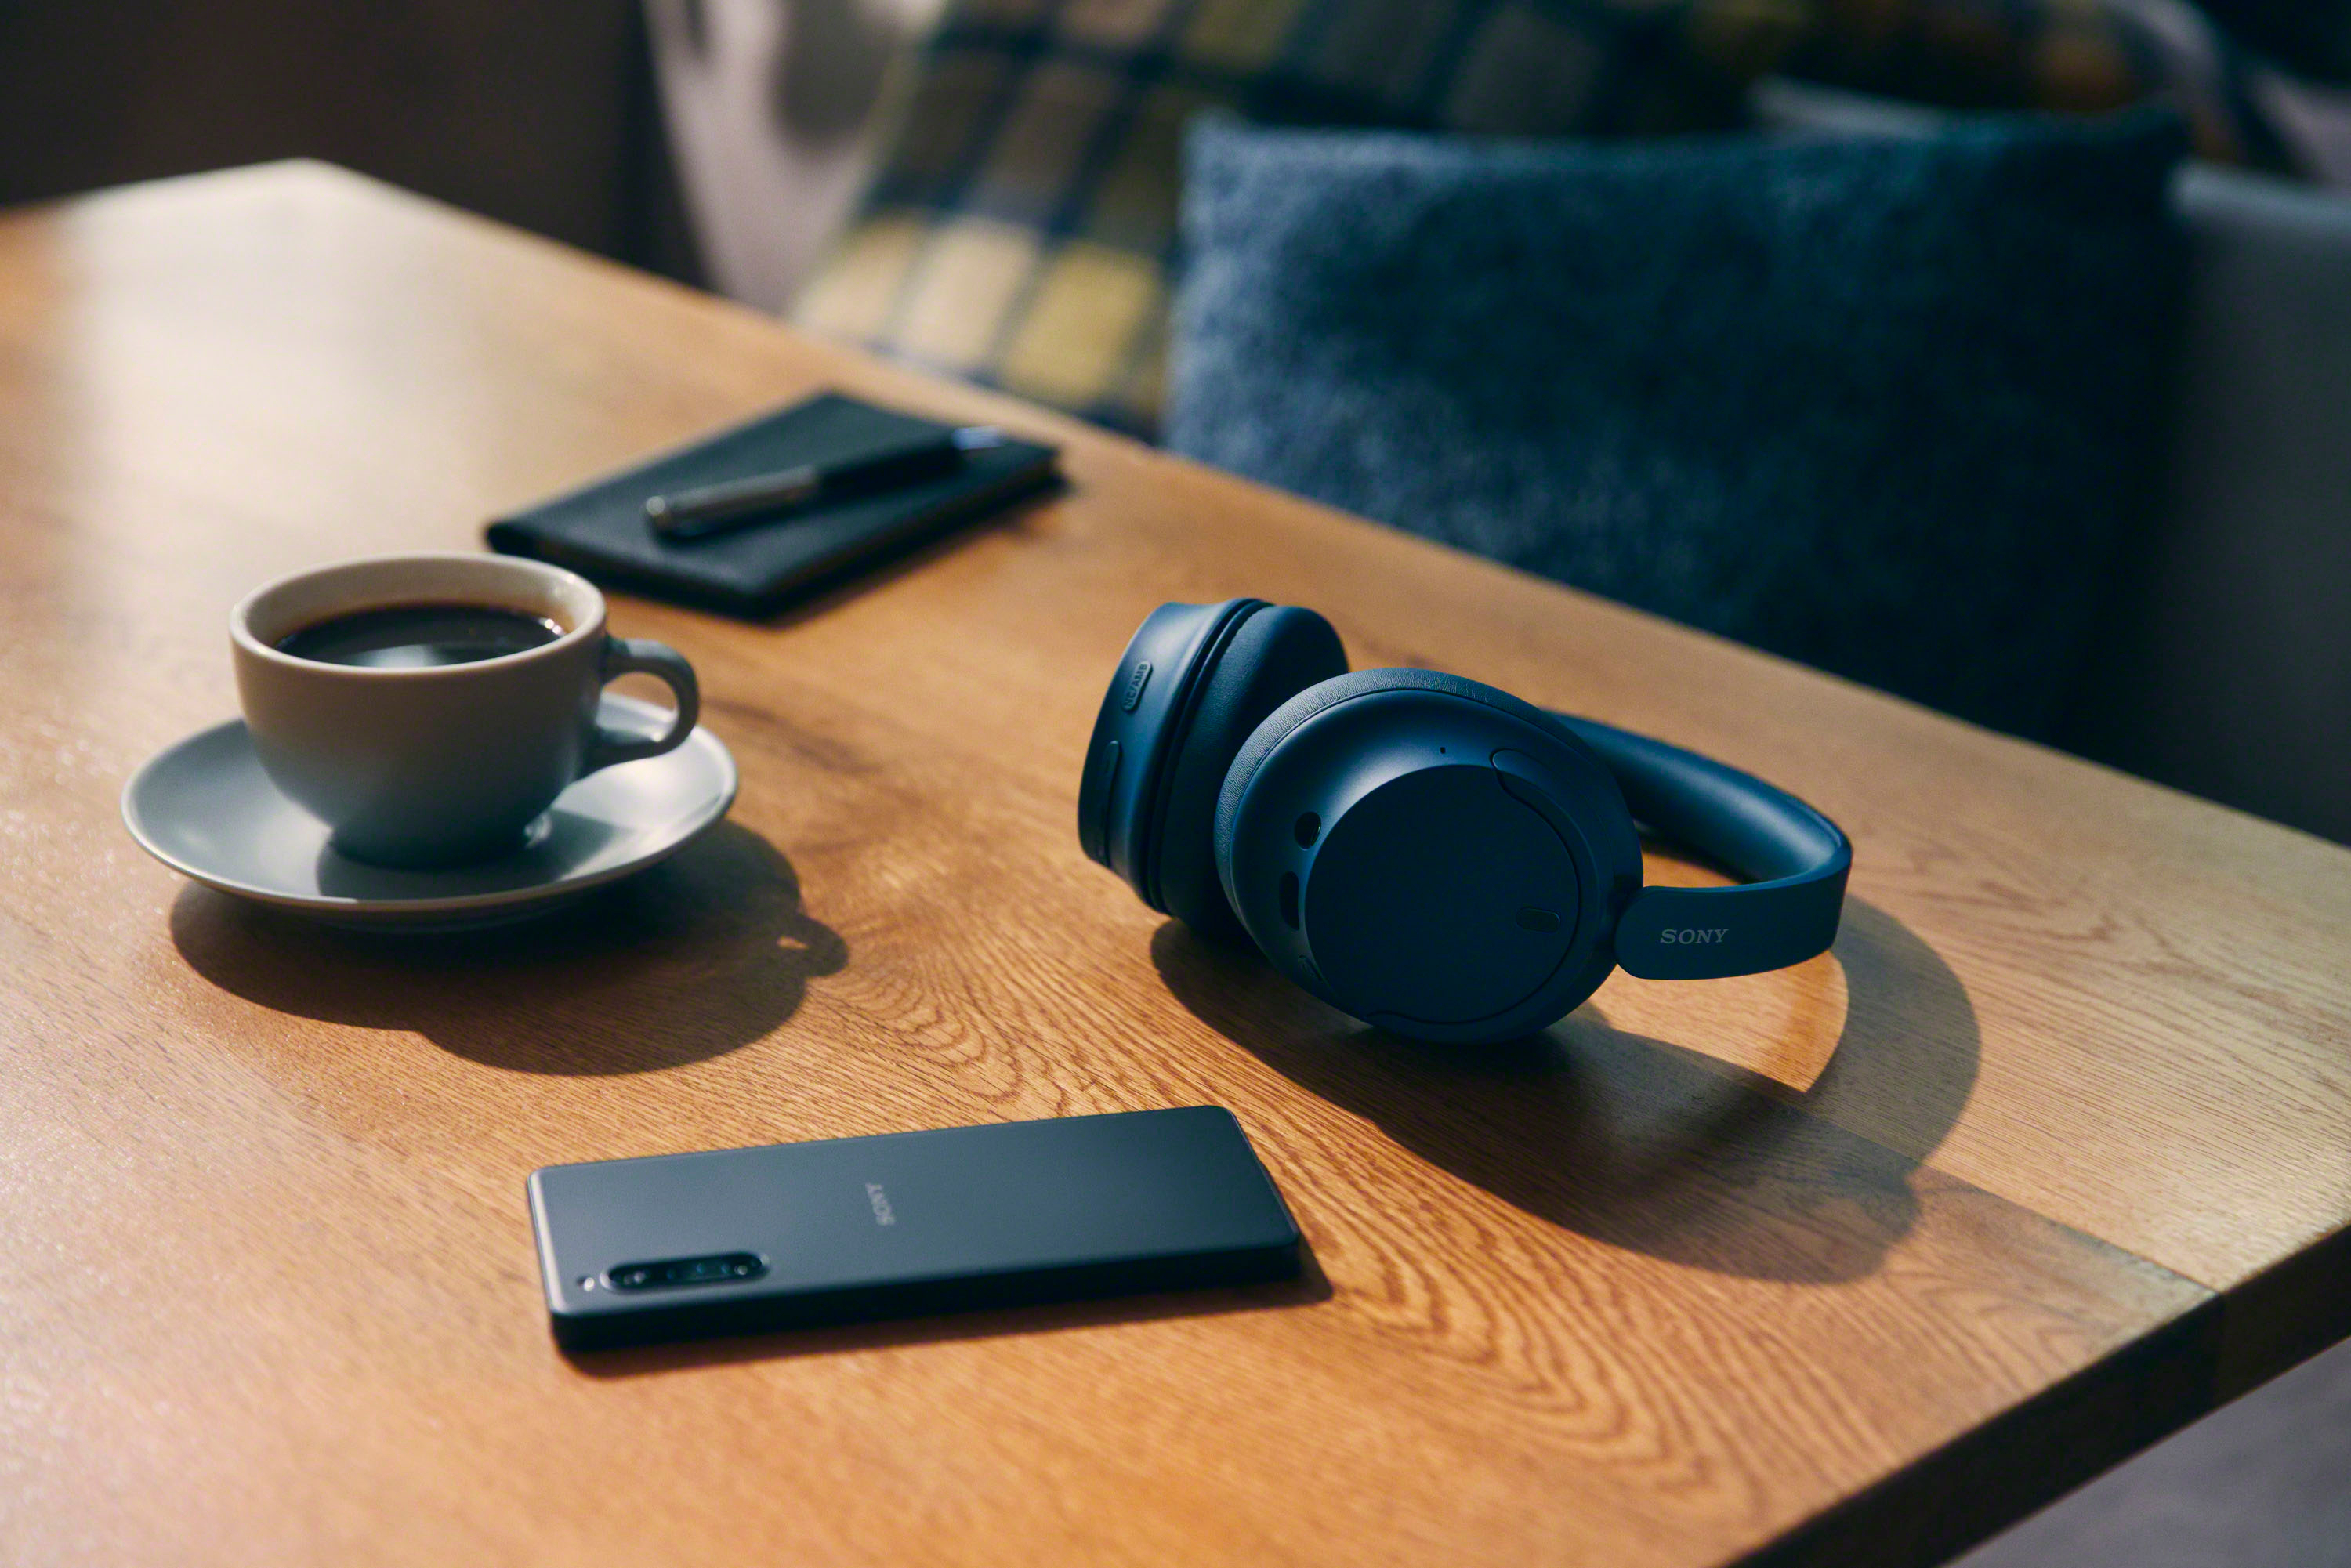 Sony WHCH720N Wireless Noise Canceling Headphones Blue WHCH720N/L - Best Buy